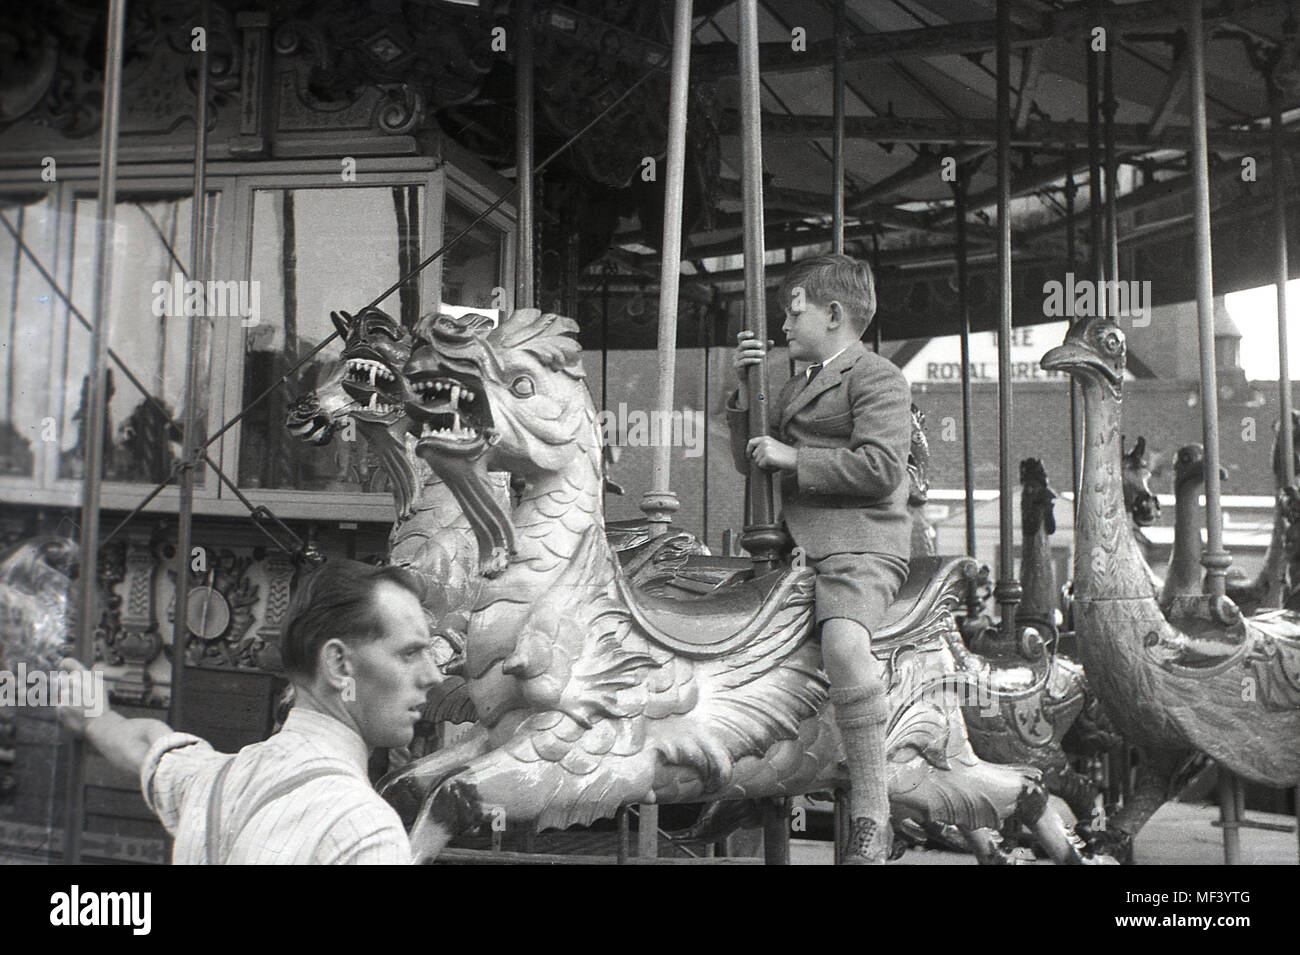 1948, young boy wearing school uniform riding a wooden dragon on a fun fair merry-go-round, London, England, Uk. Stock Photo